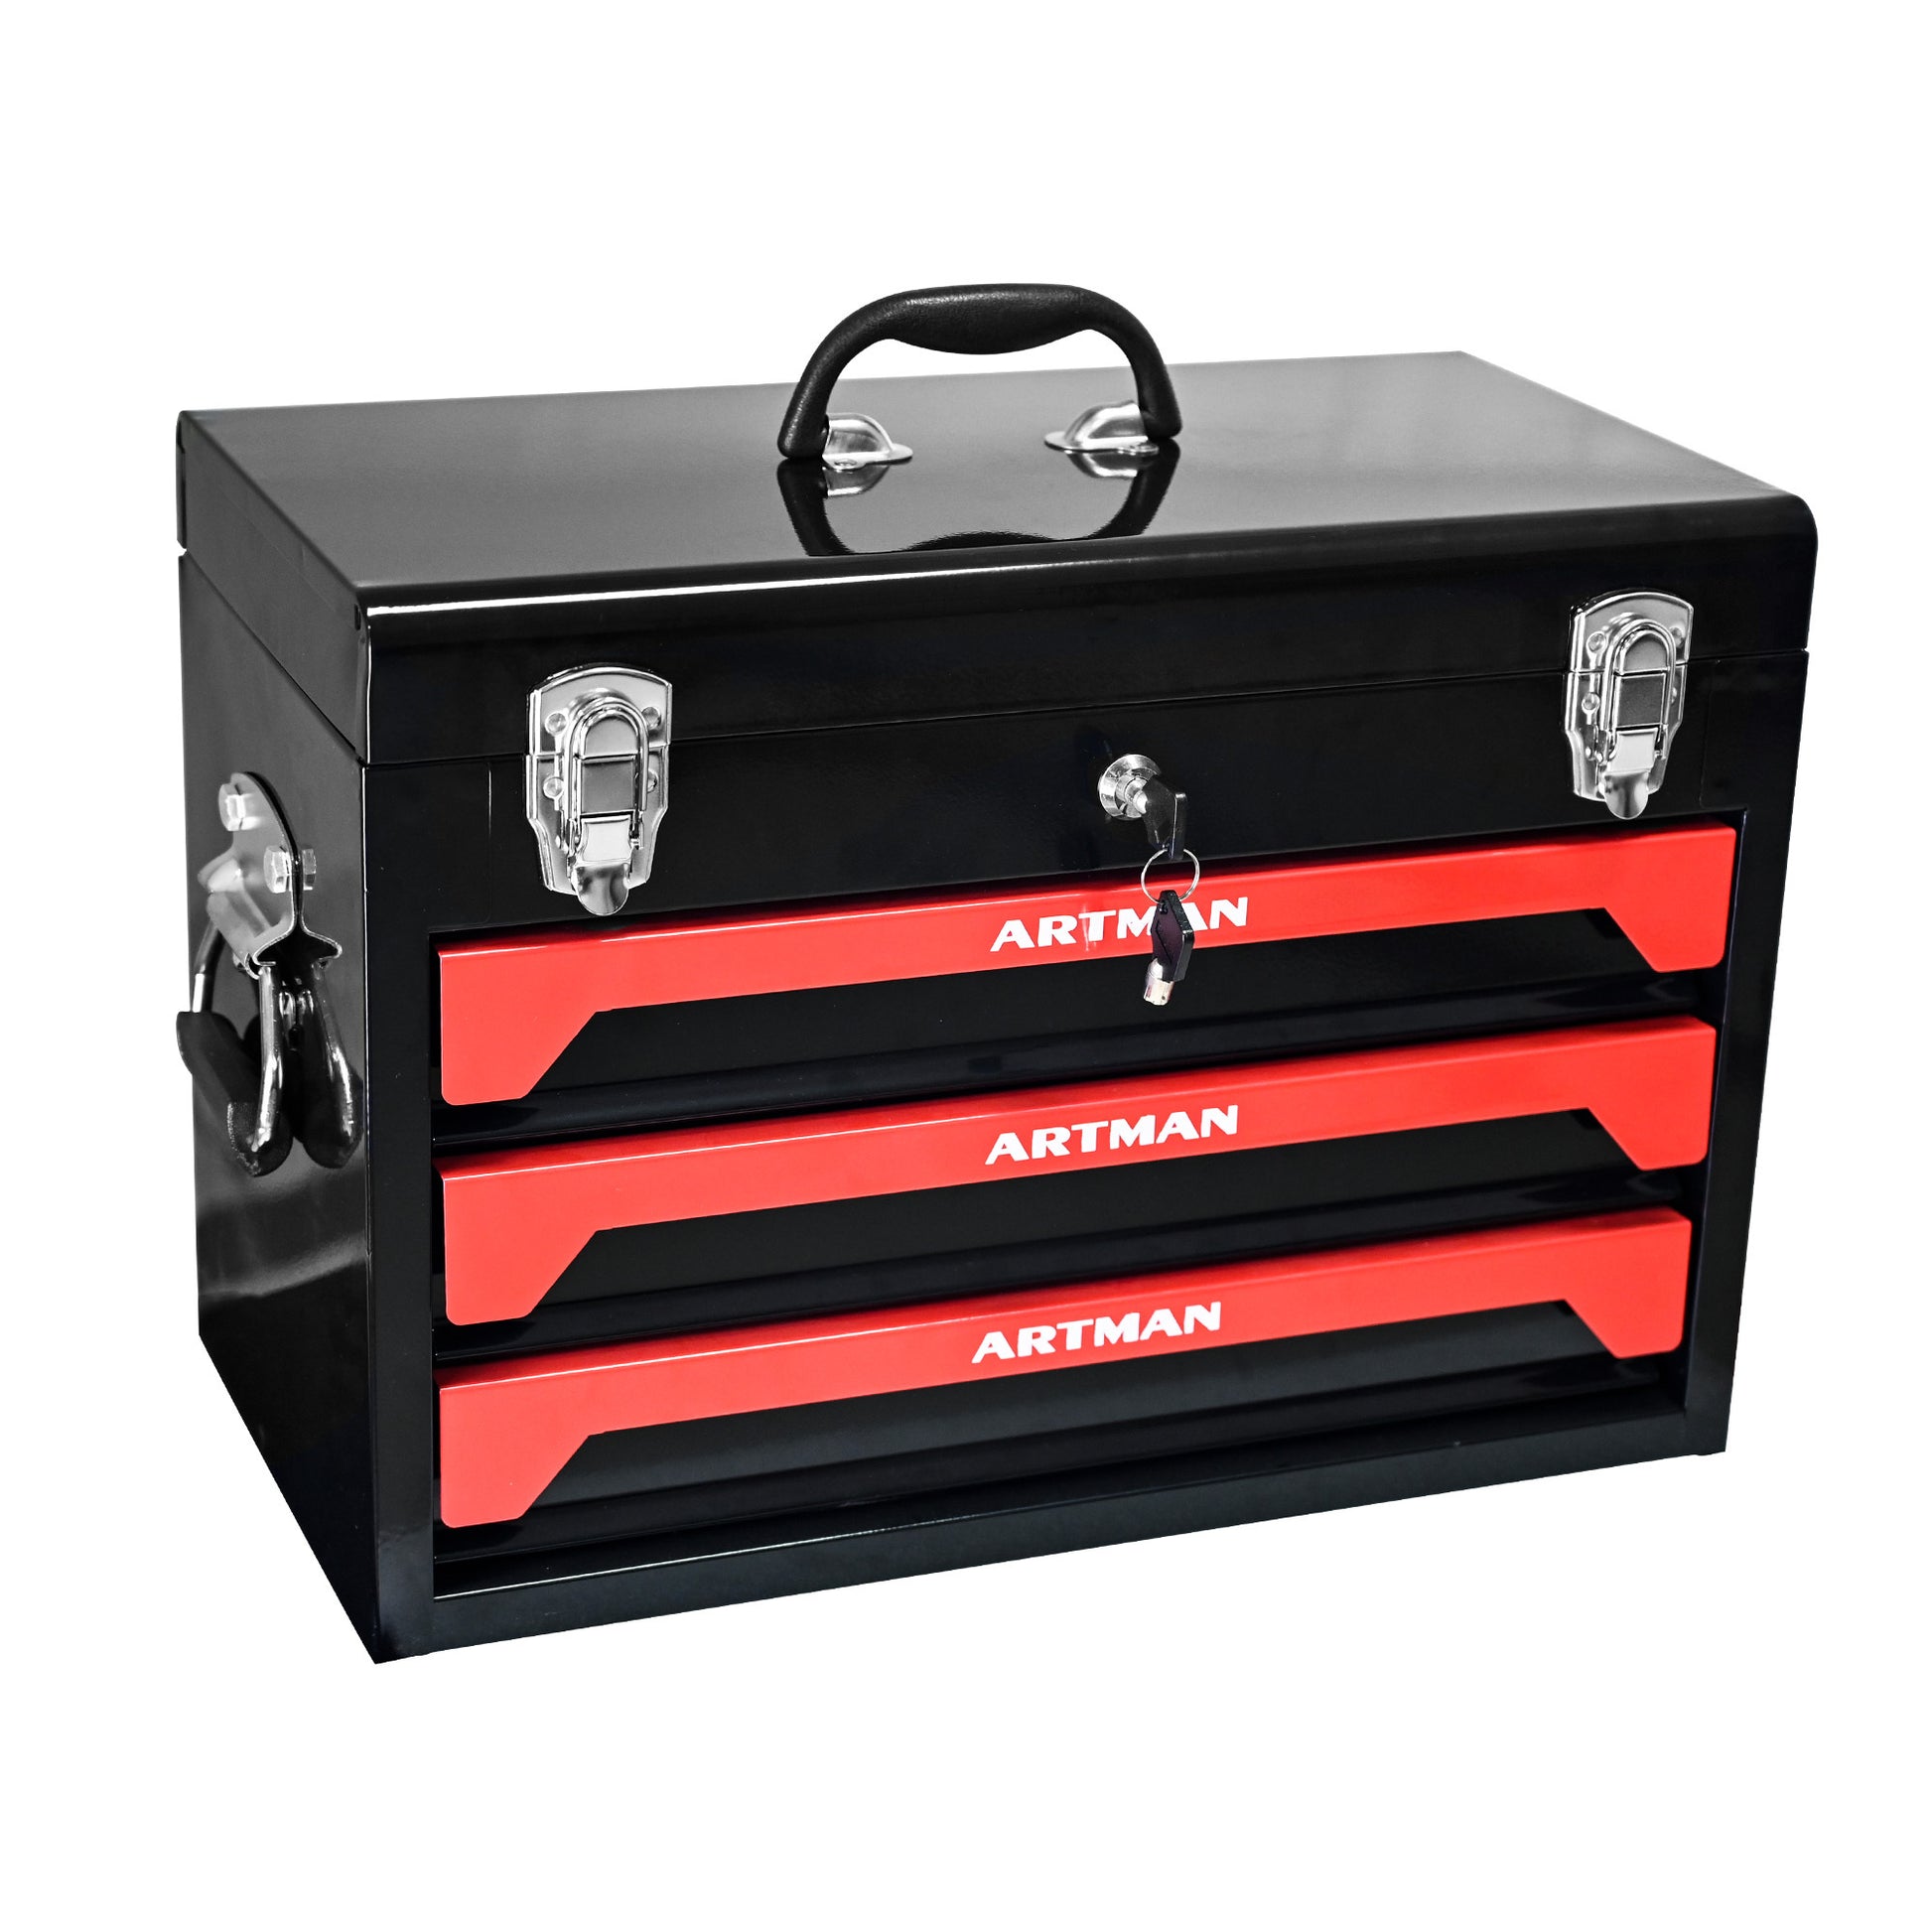 3 Drawers Tool Box - Black Red Steel